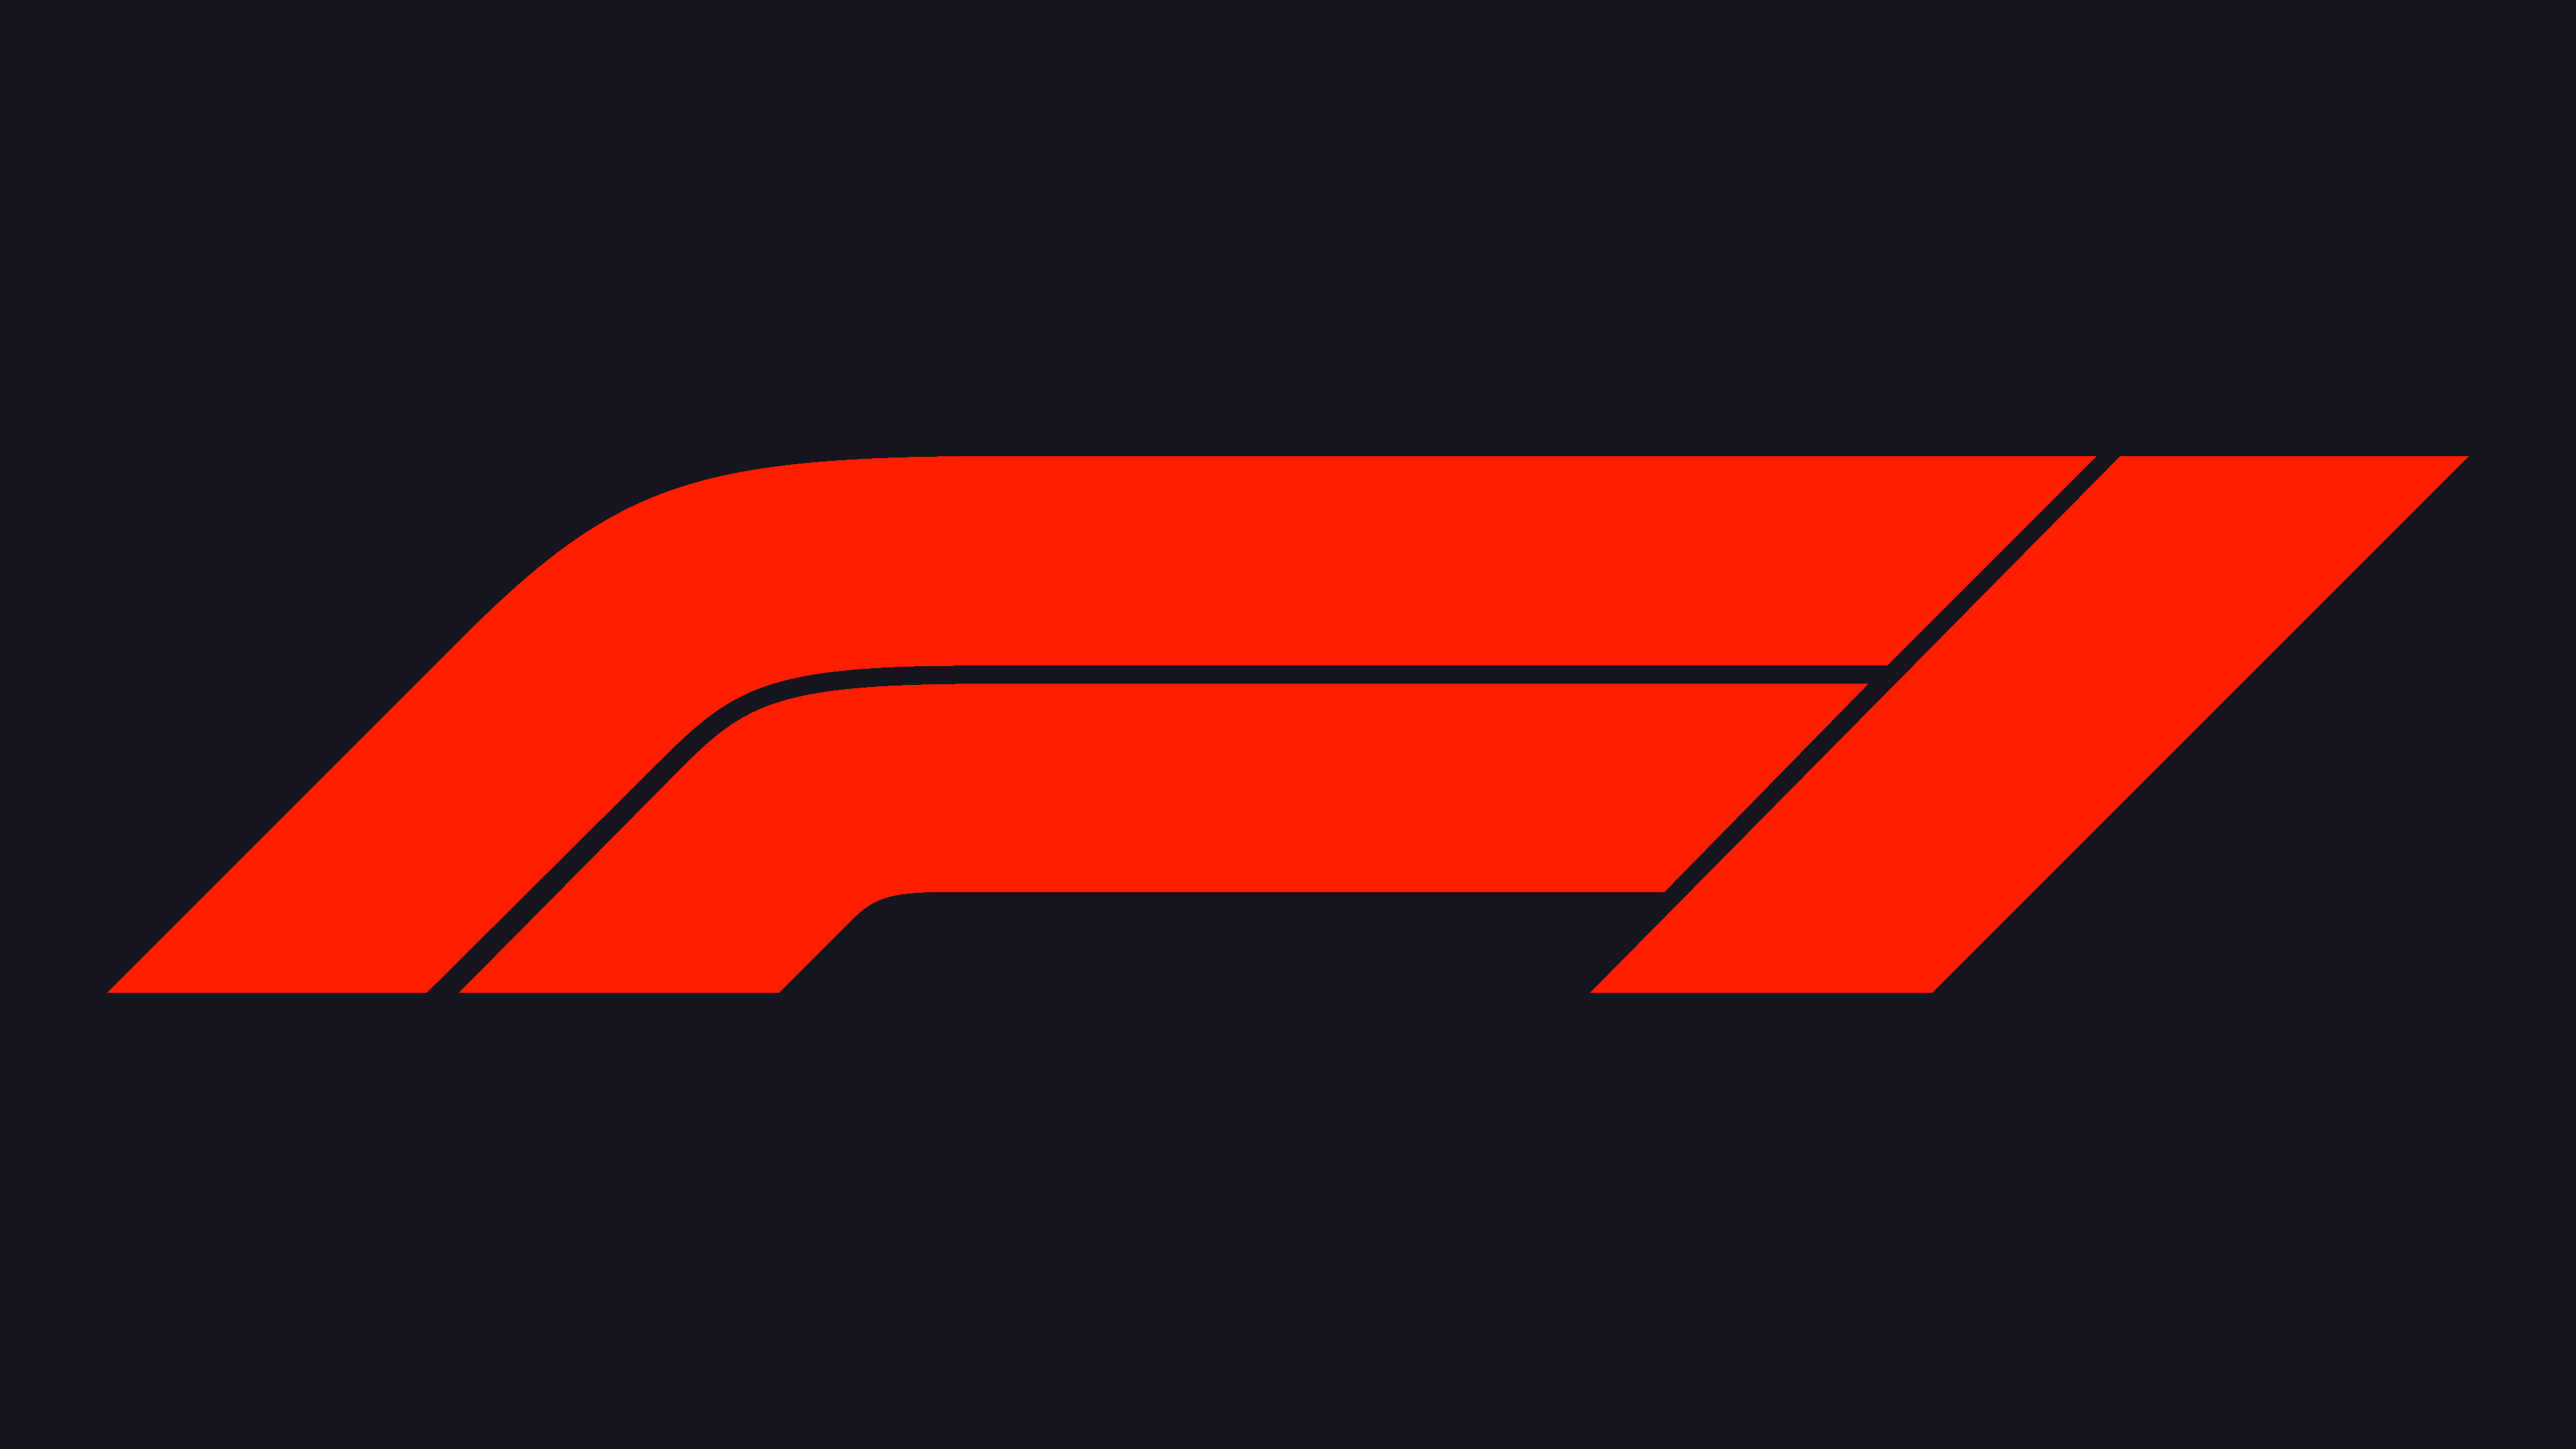 Formula 1 Logo Wallpapers Top Free Formula 1 Logo Backgrounds